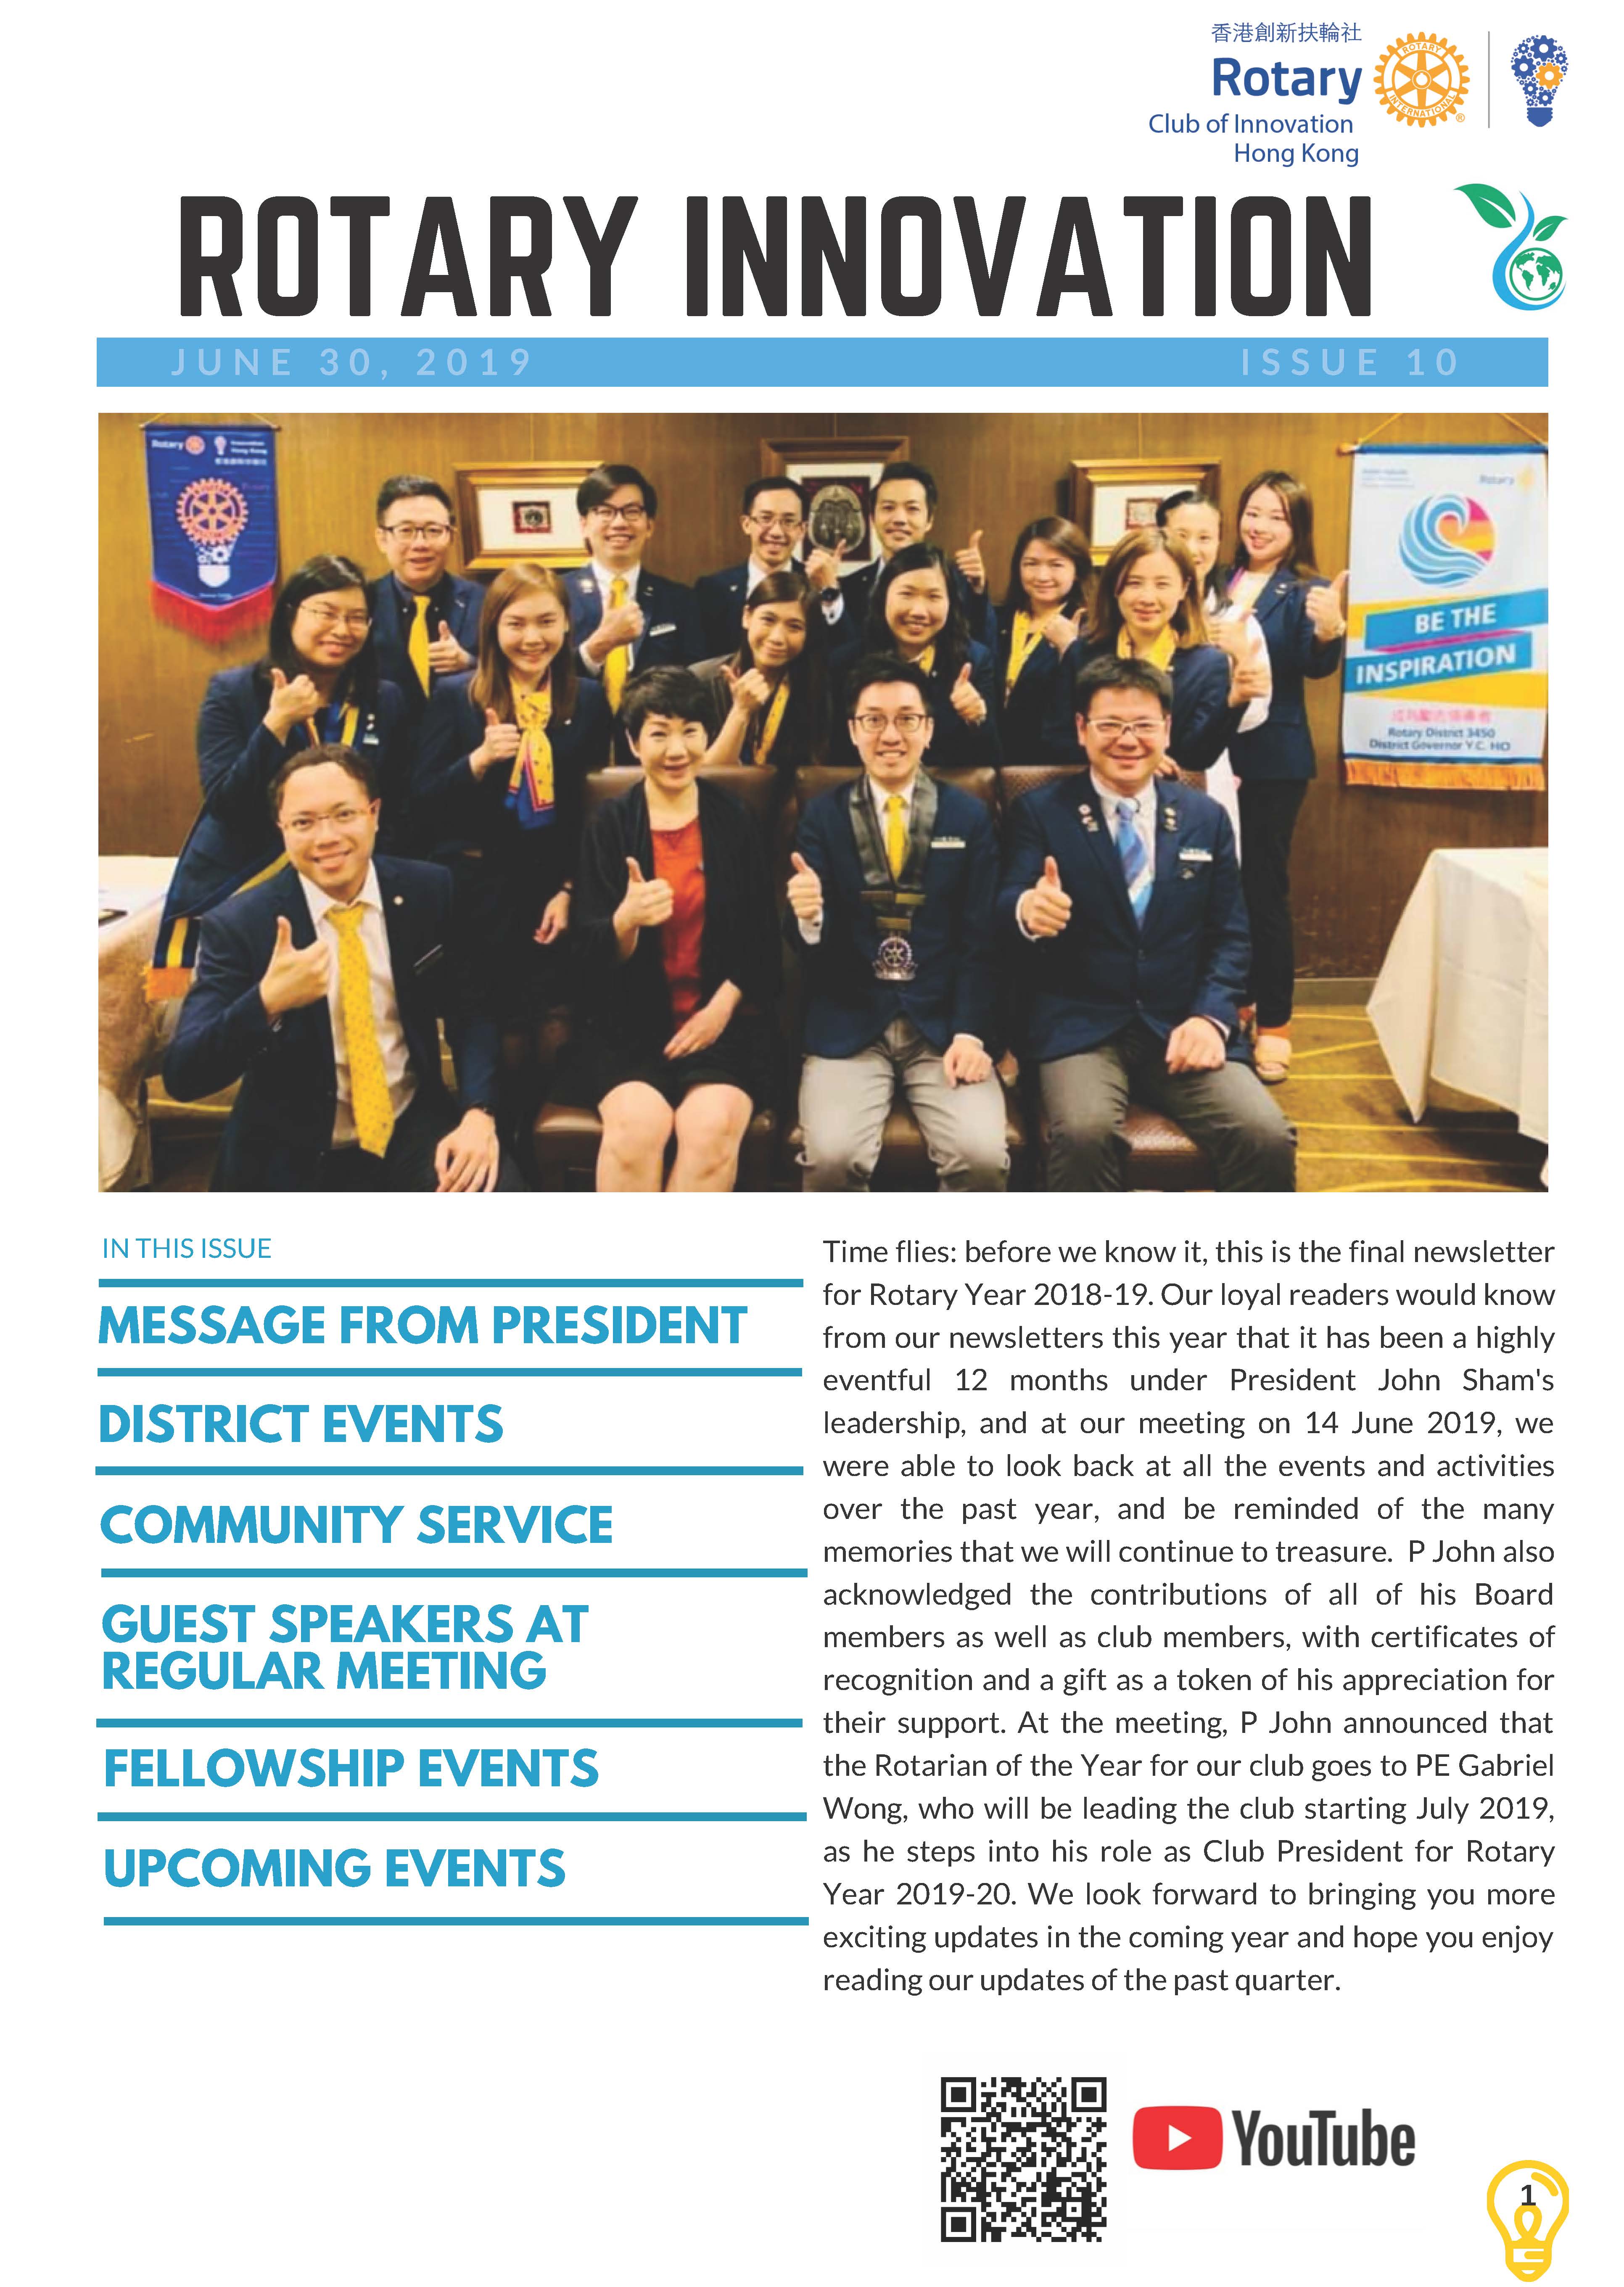 Rotary Innovation Newsletter Issue 10